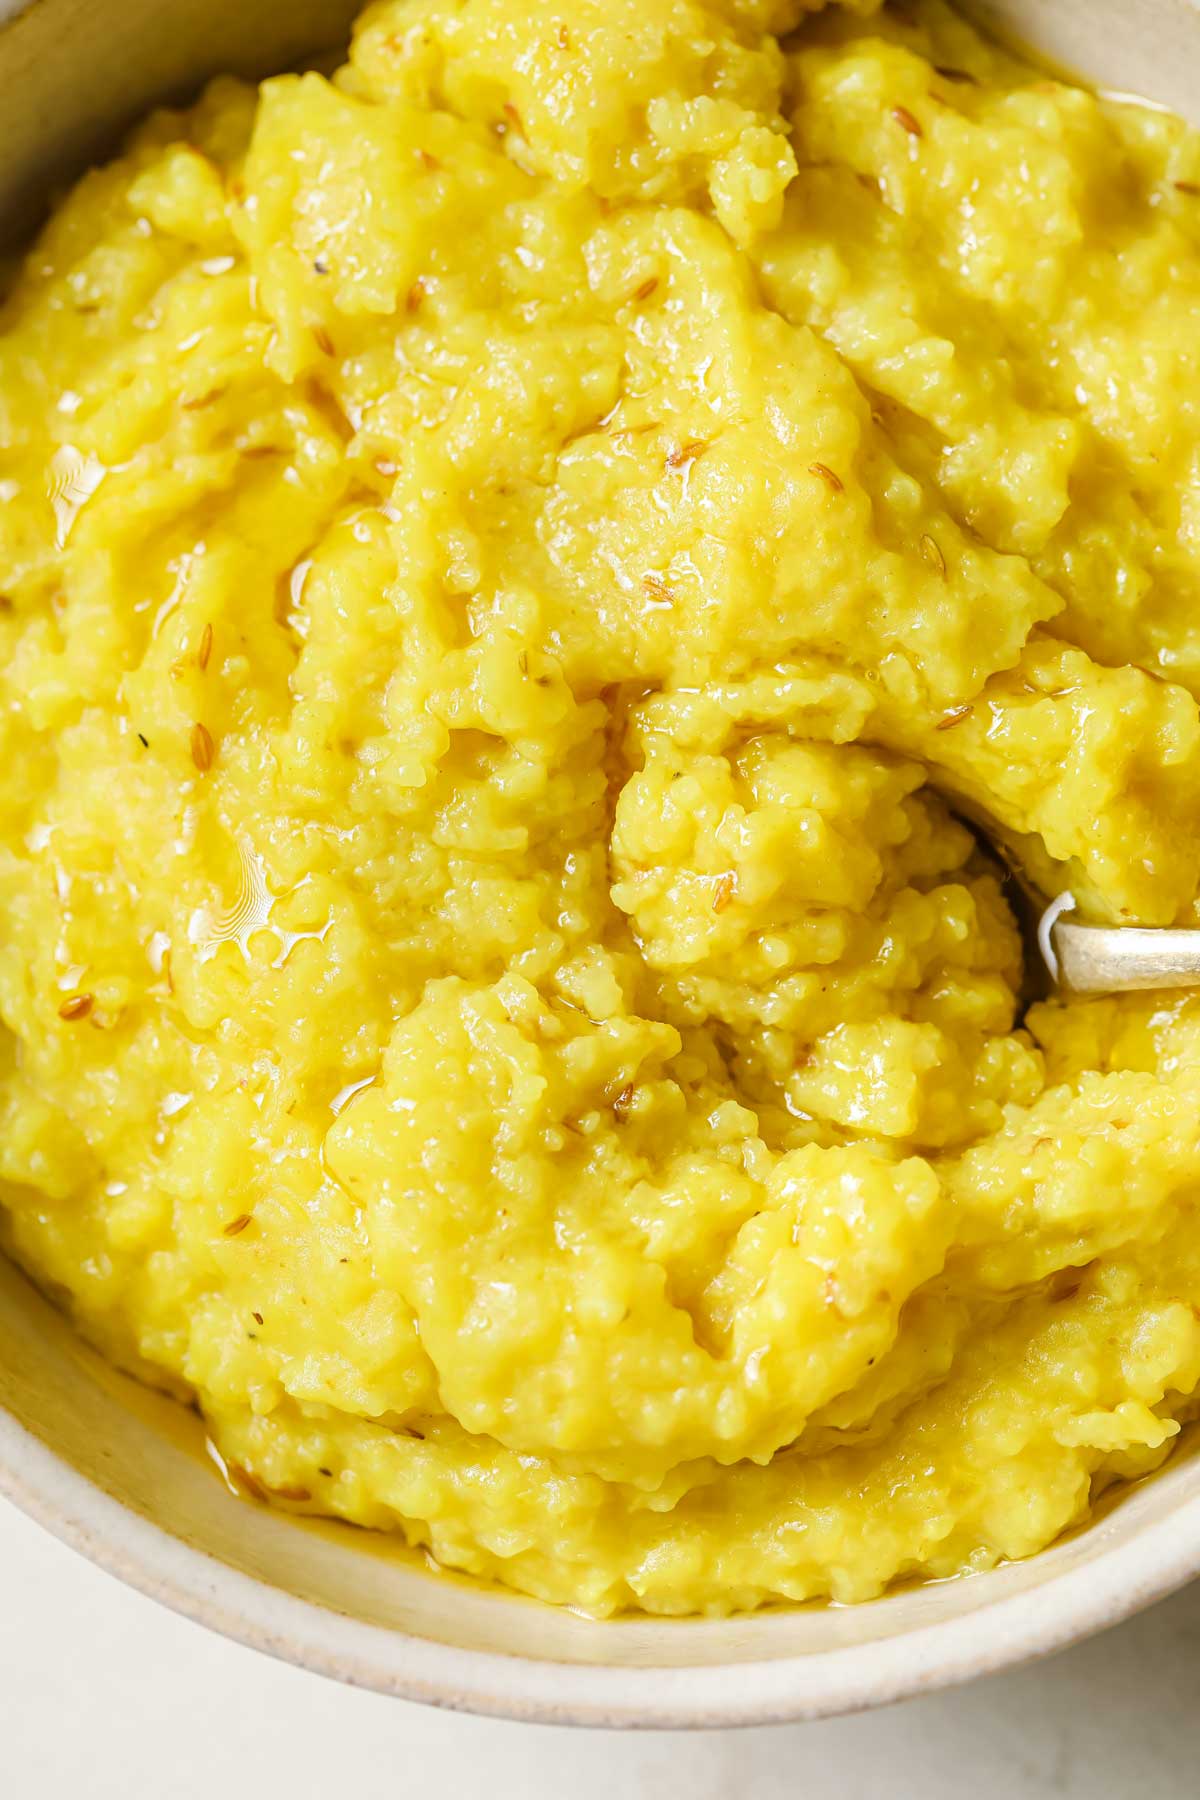 khichdi (rice and yellow lentil porridge)